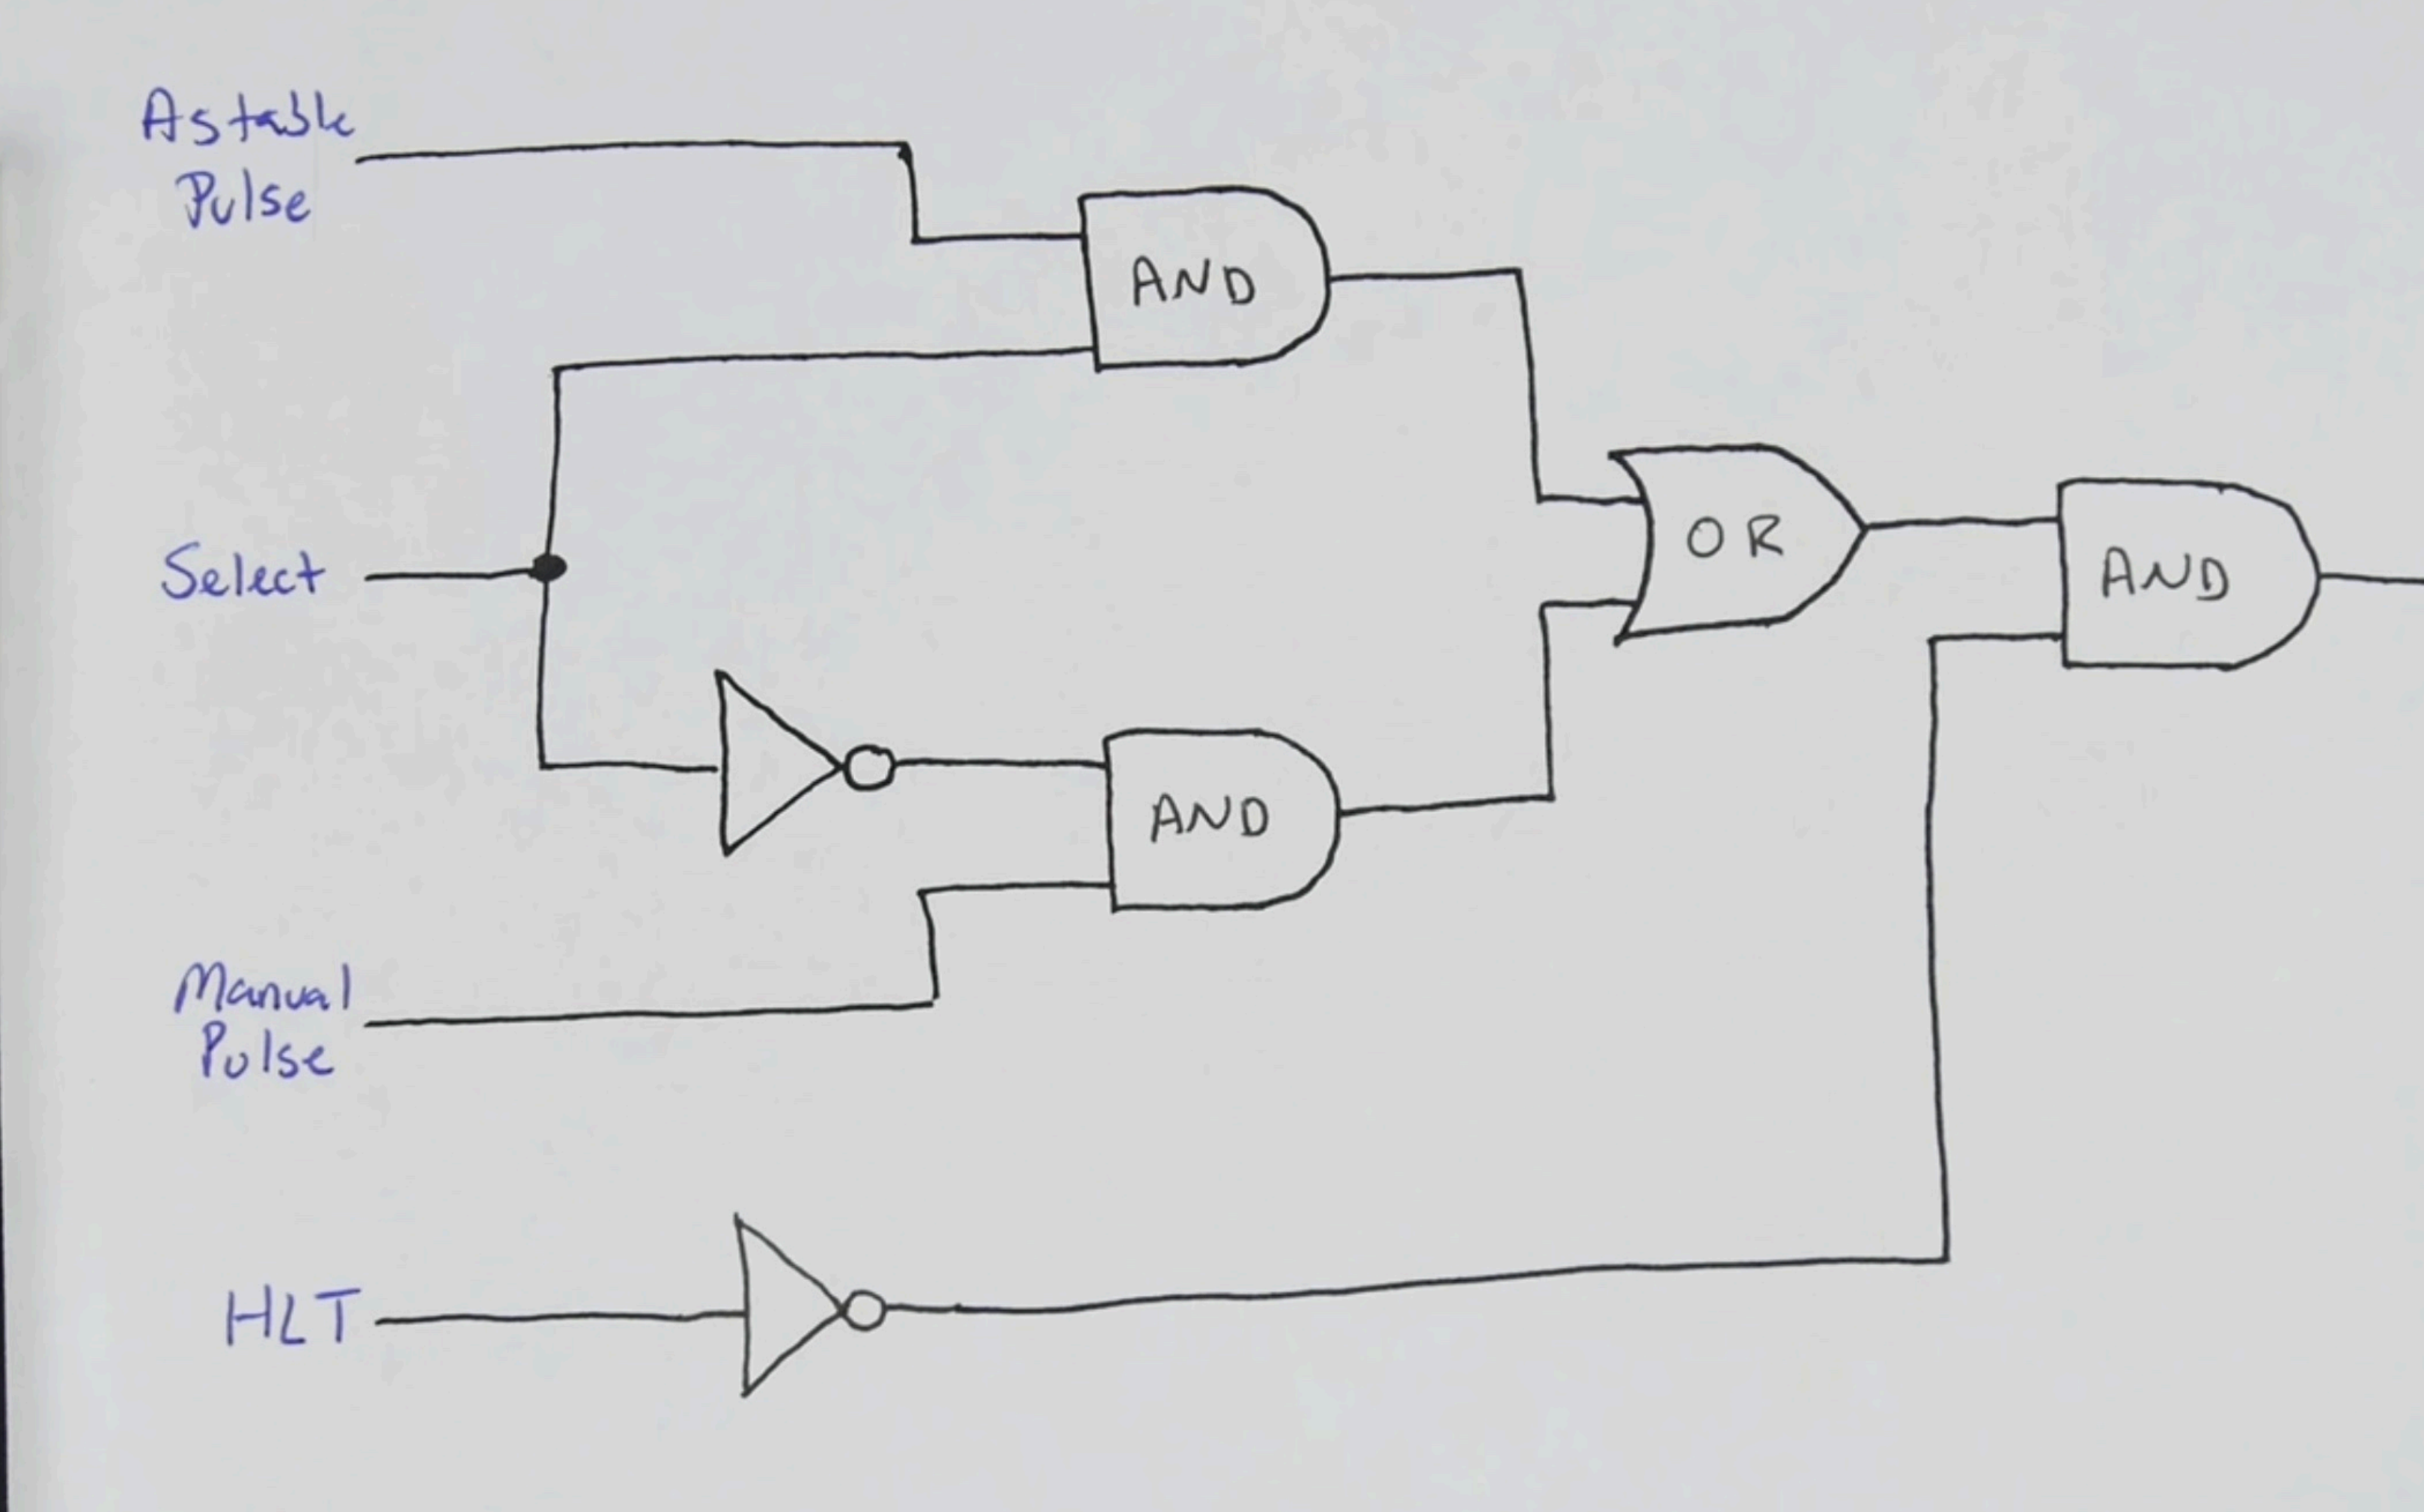 Figure 13: Clock switching Logic using And Gates